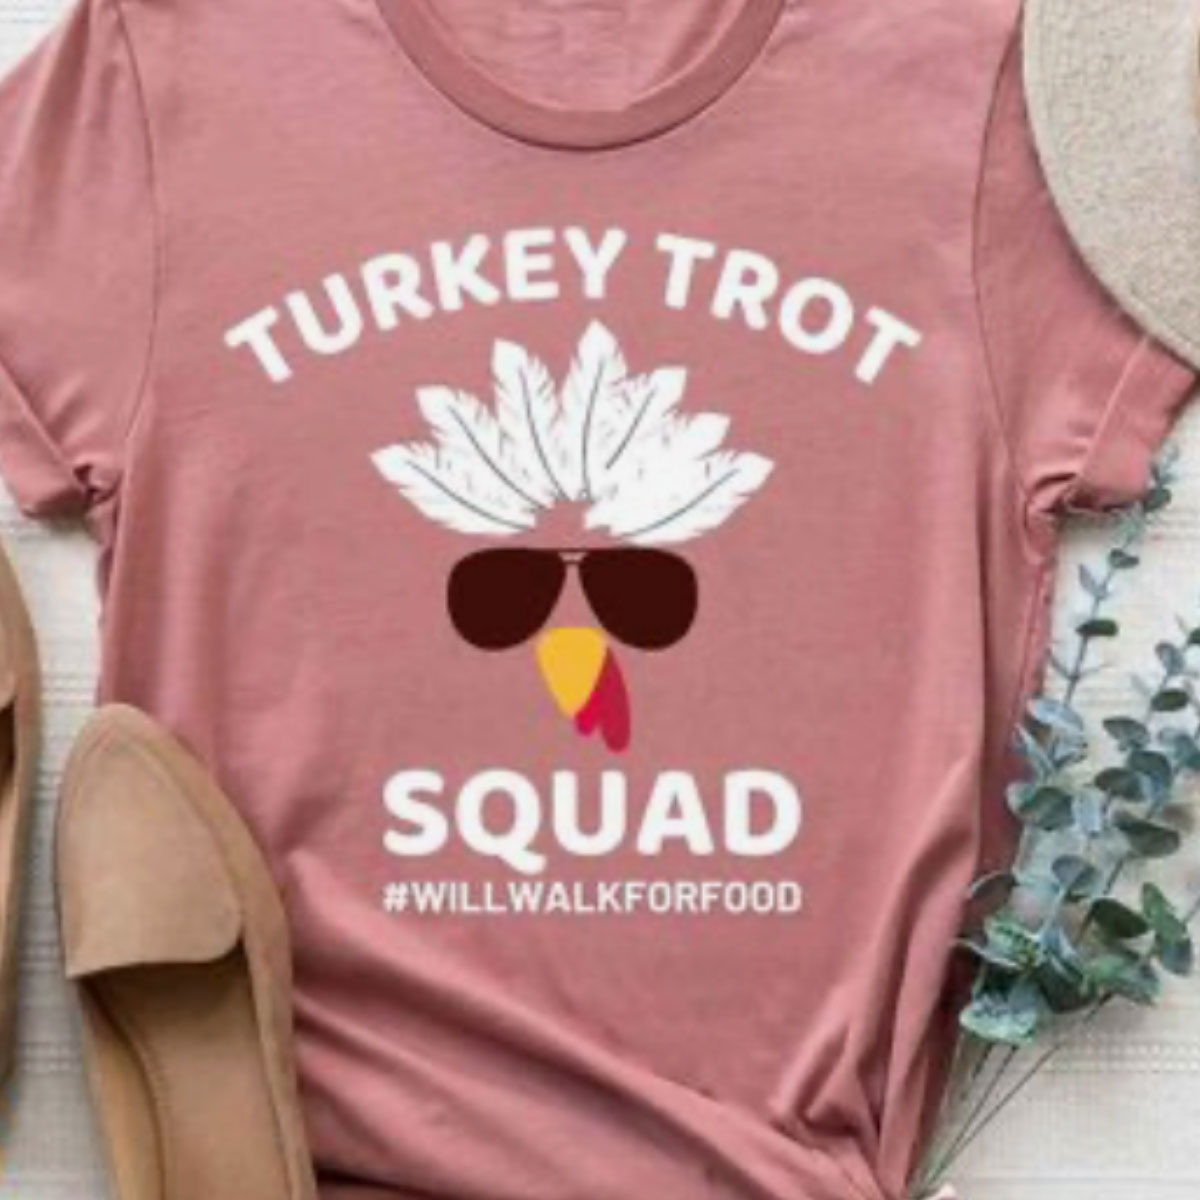 Turkey trot themed shirt